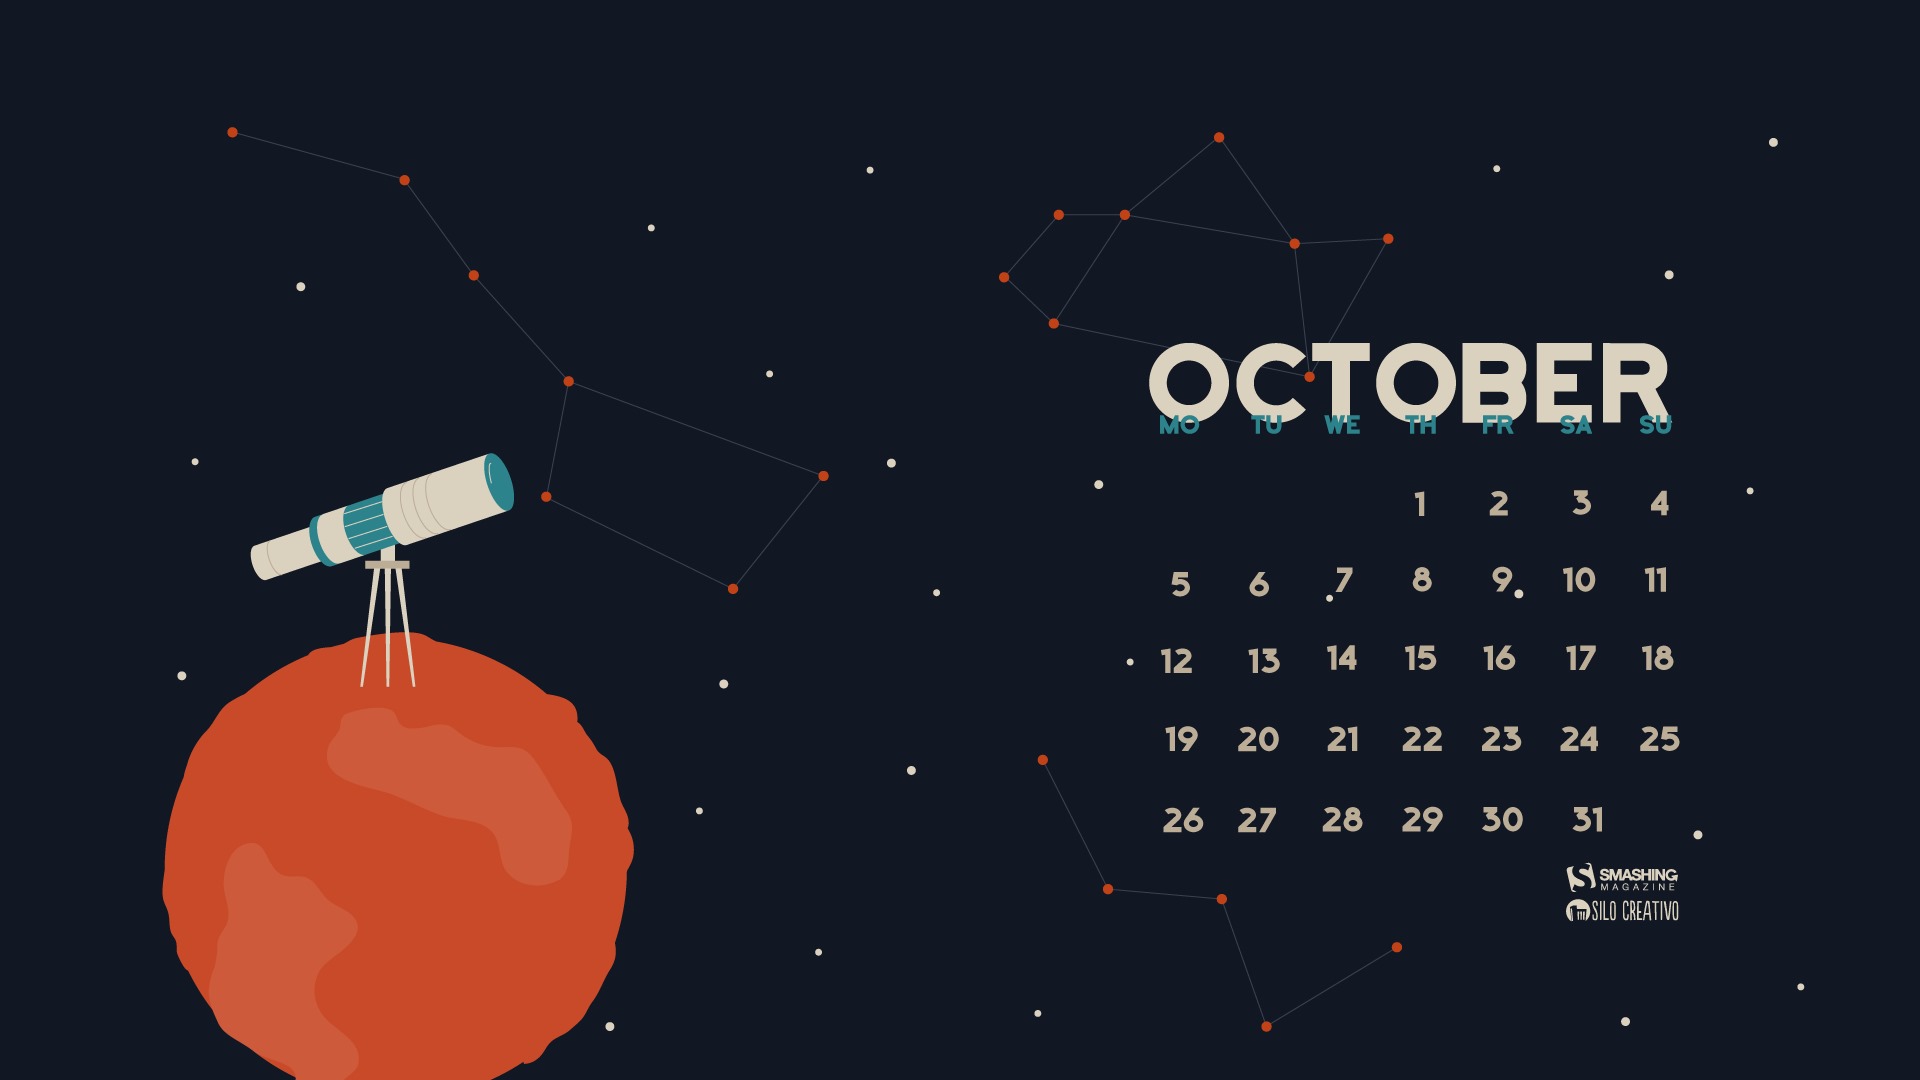 October 2015 calendar wallpaper (2) #9 - 1920x1080